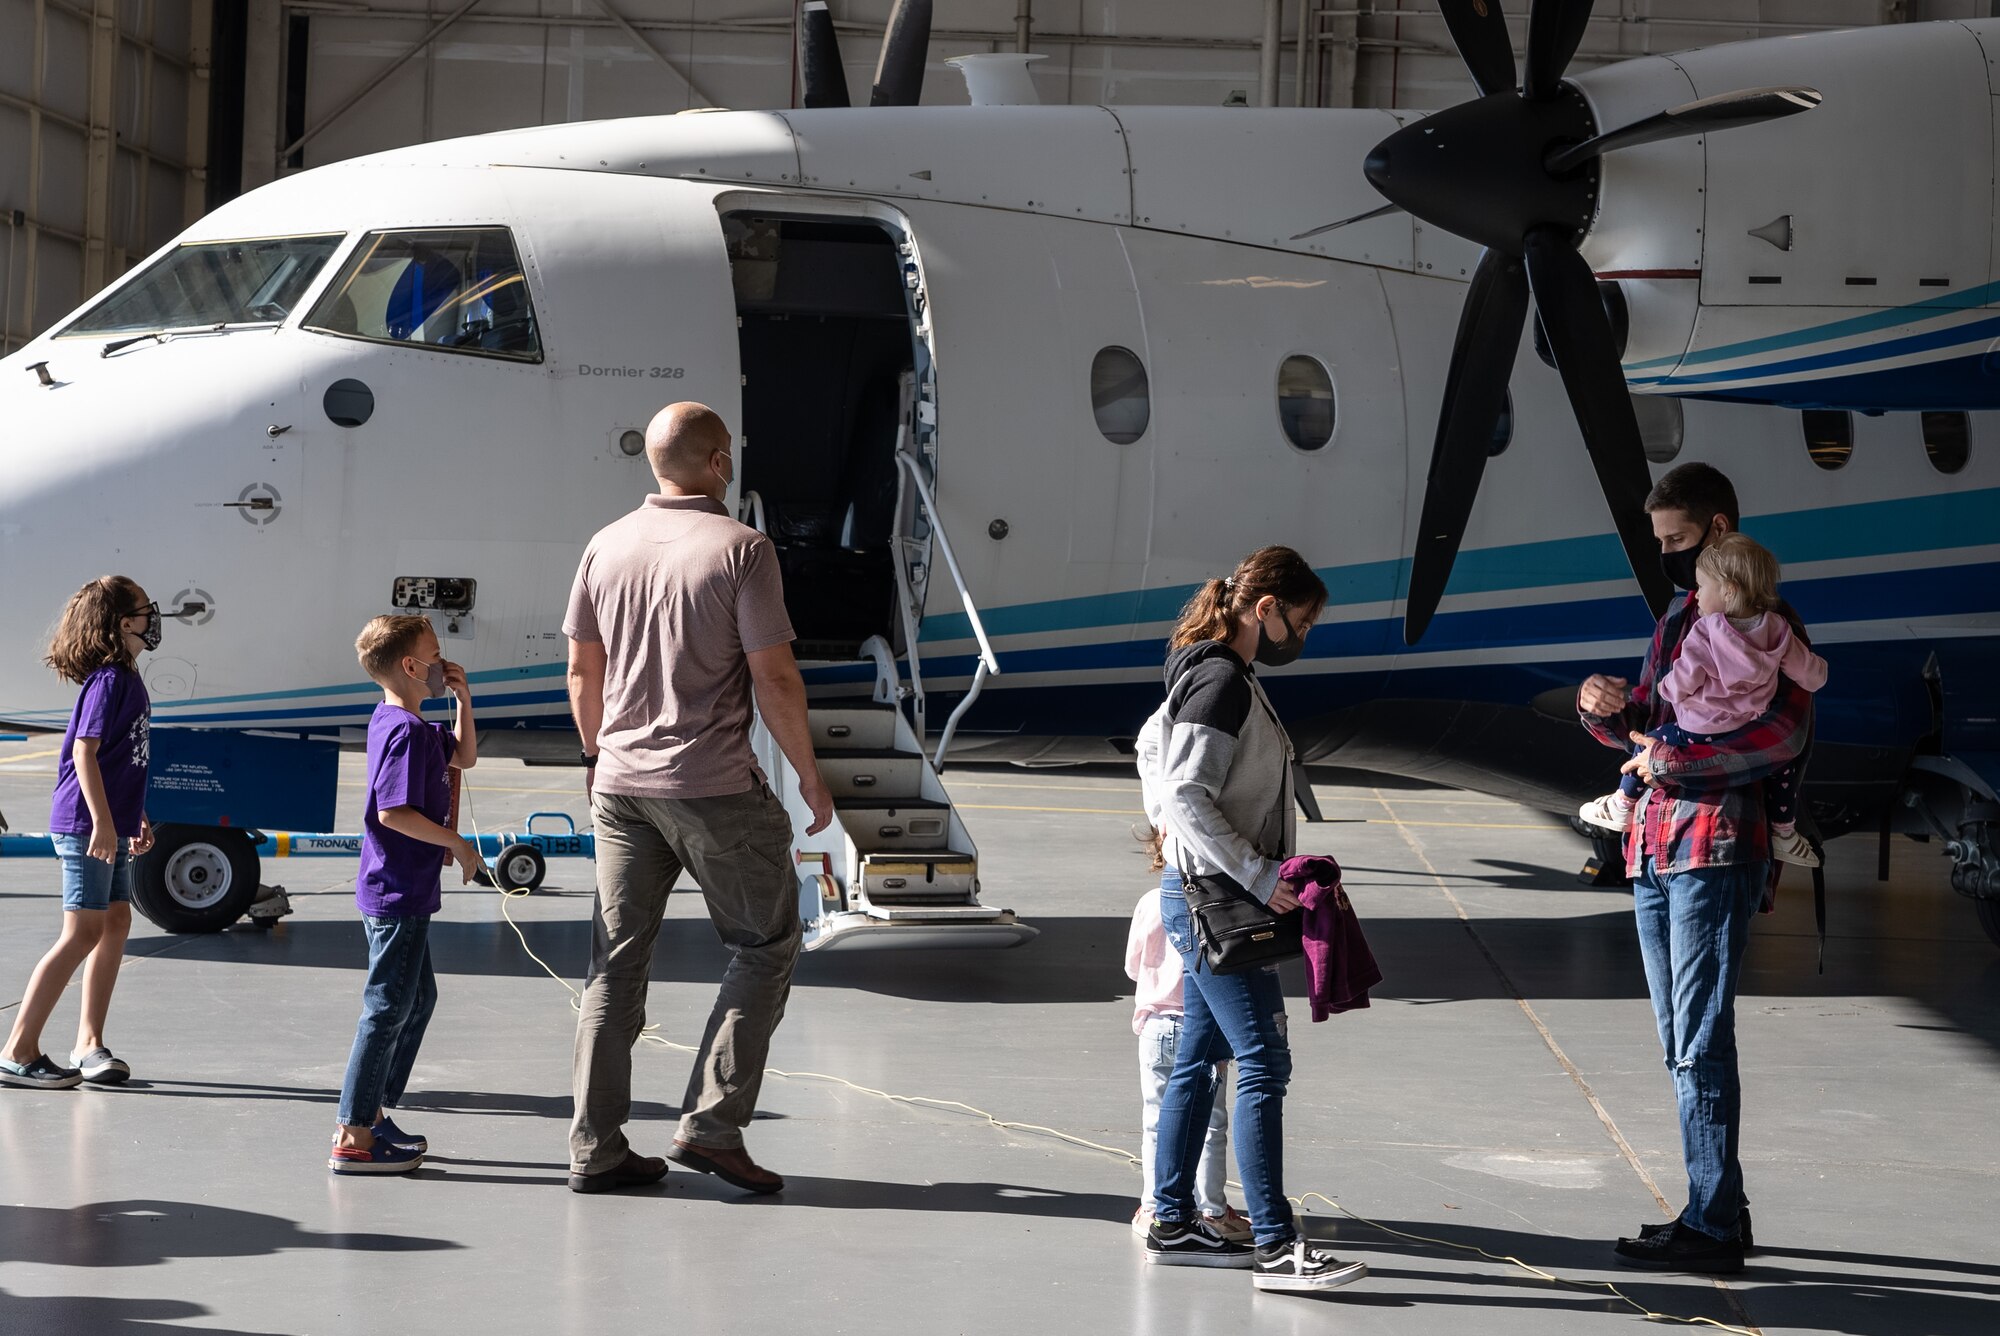 Families walk around a military aircraft.